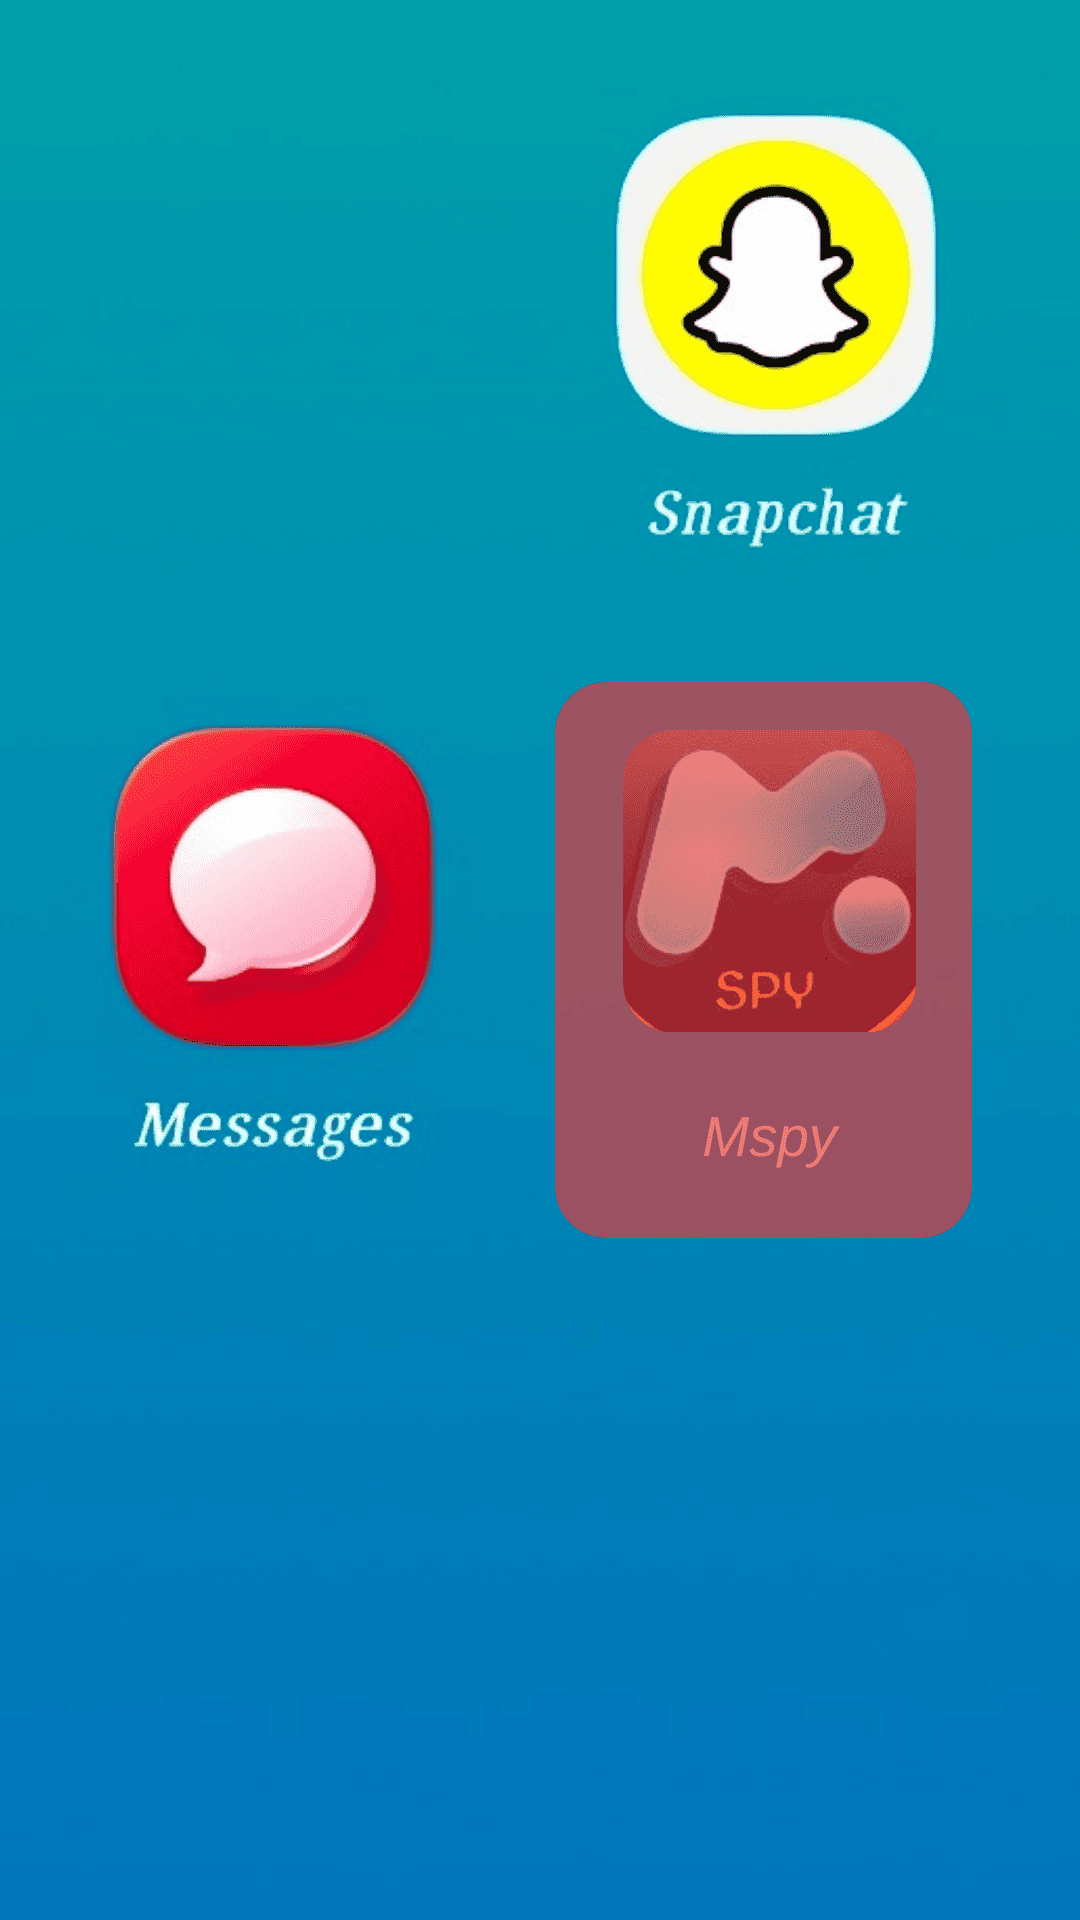 Install The Mspy App On Your Boyfriend's Phone.